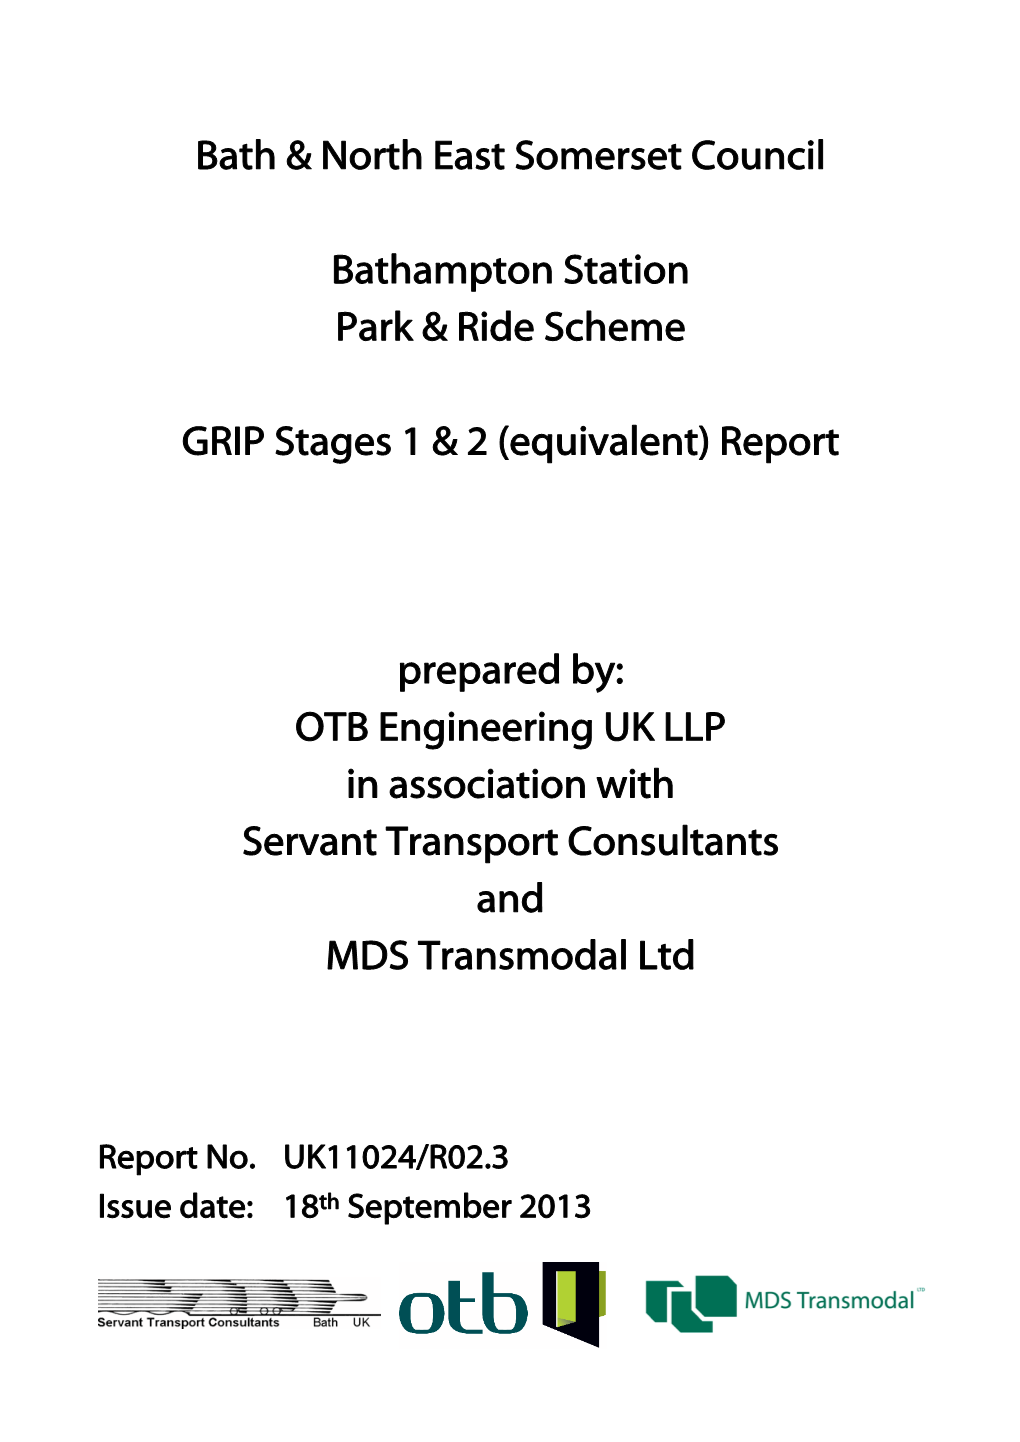 Bath & North East Somerset Council Bathampton Station Park & Ride Scheme GRIP Stages 1 & 2 (Equivalent) Report Prepa